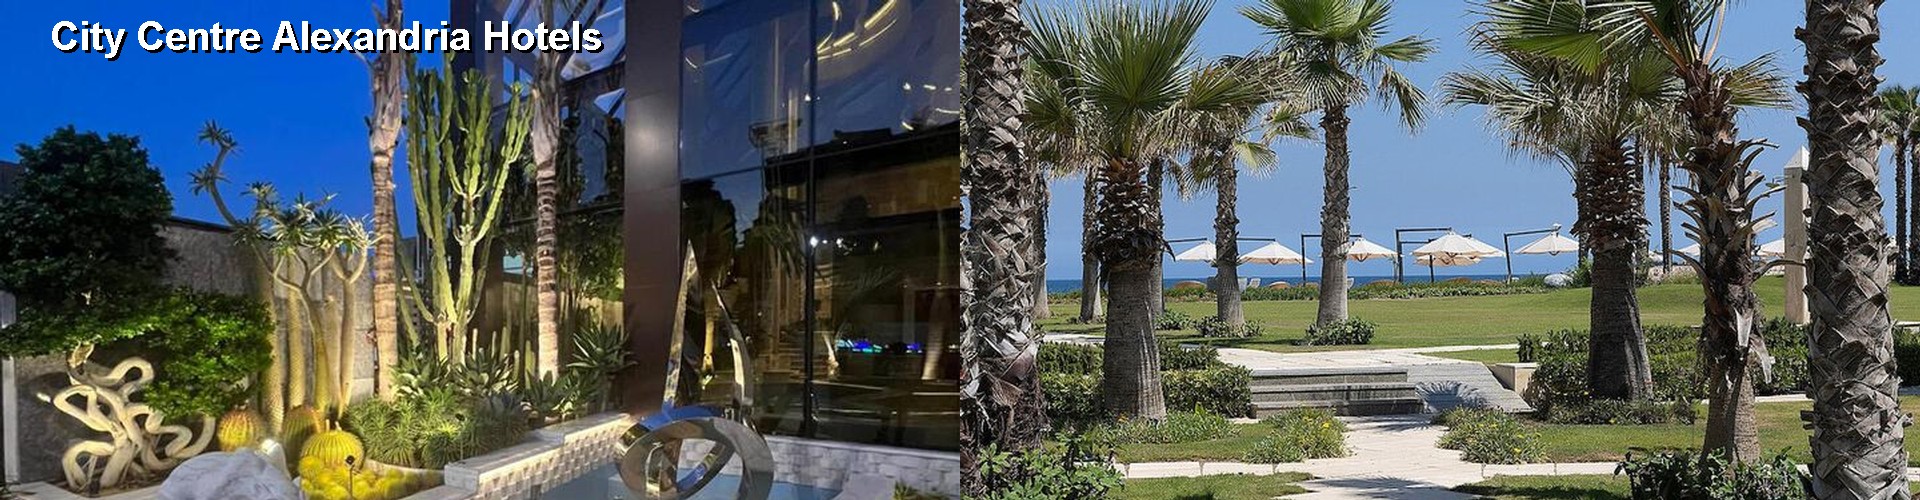 5 Best Hotels near City Centre Alexandria